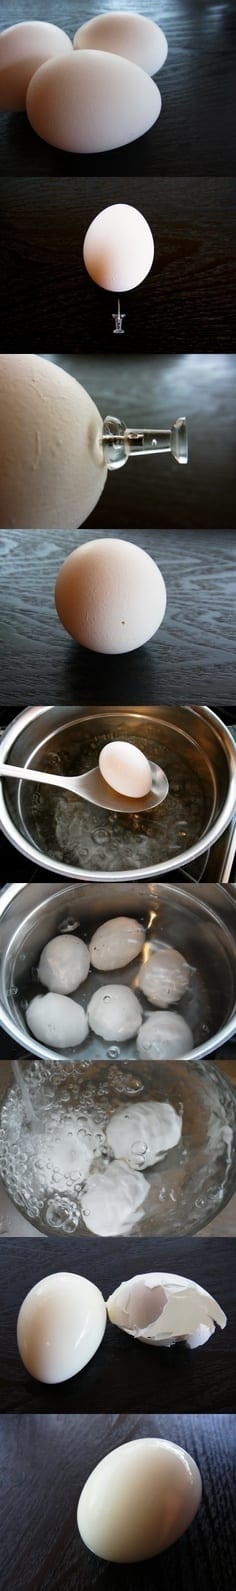 Thumb Tack Perfect Boiled Eggs